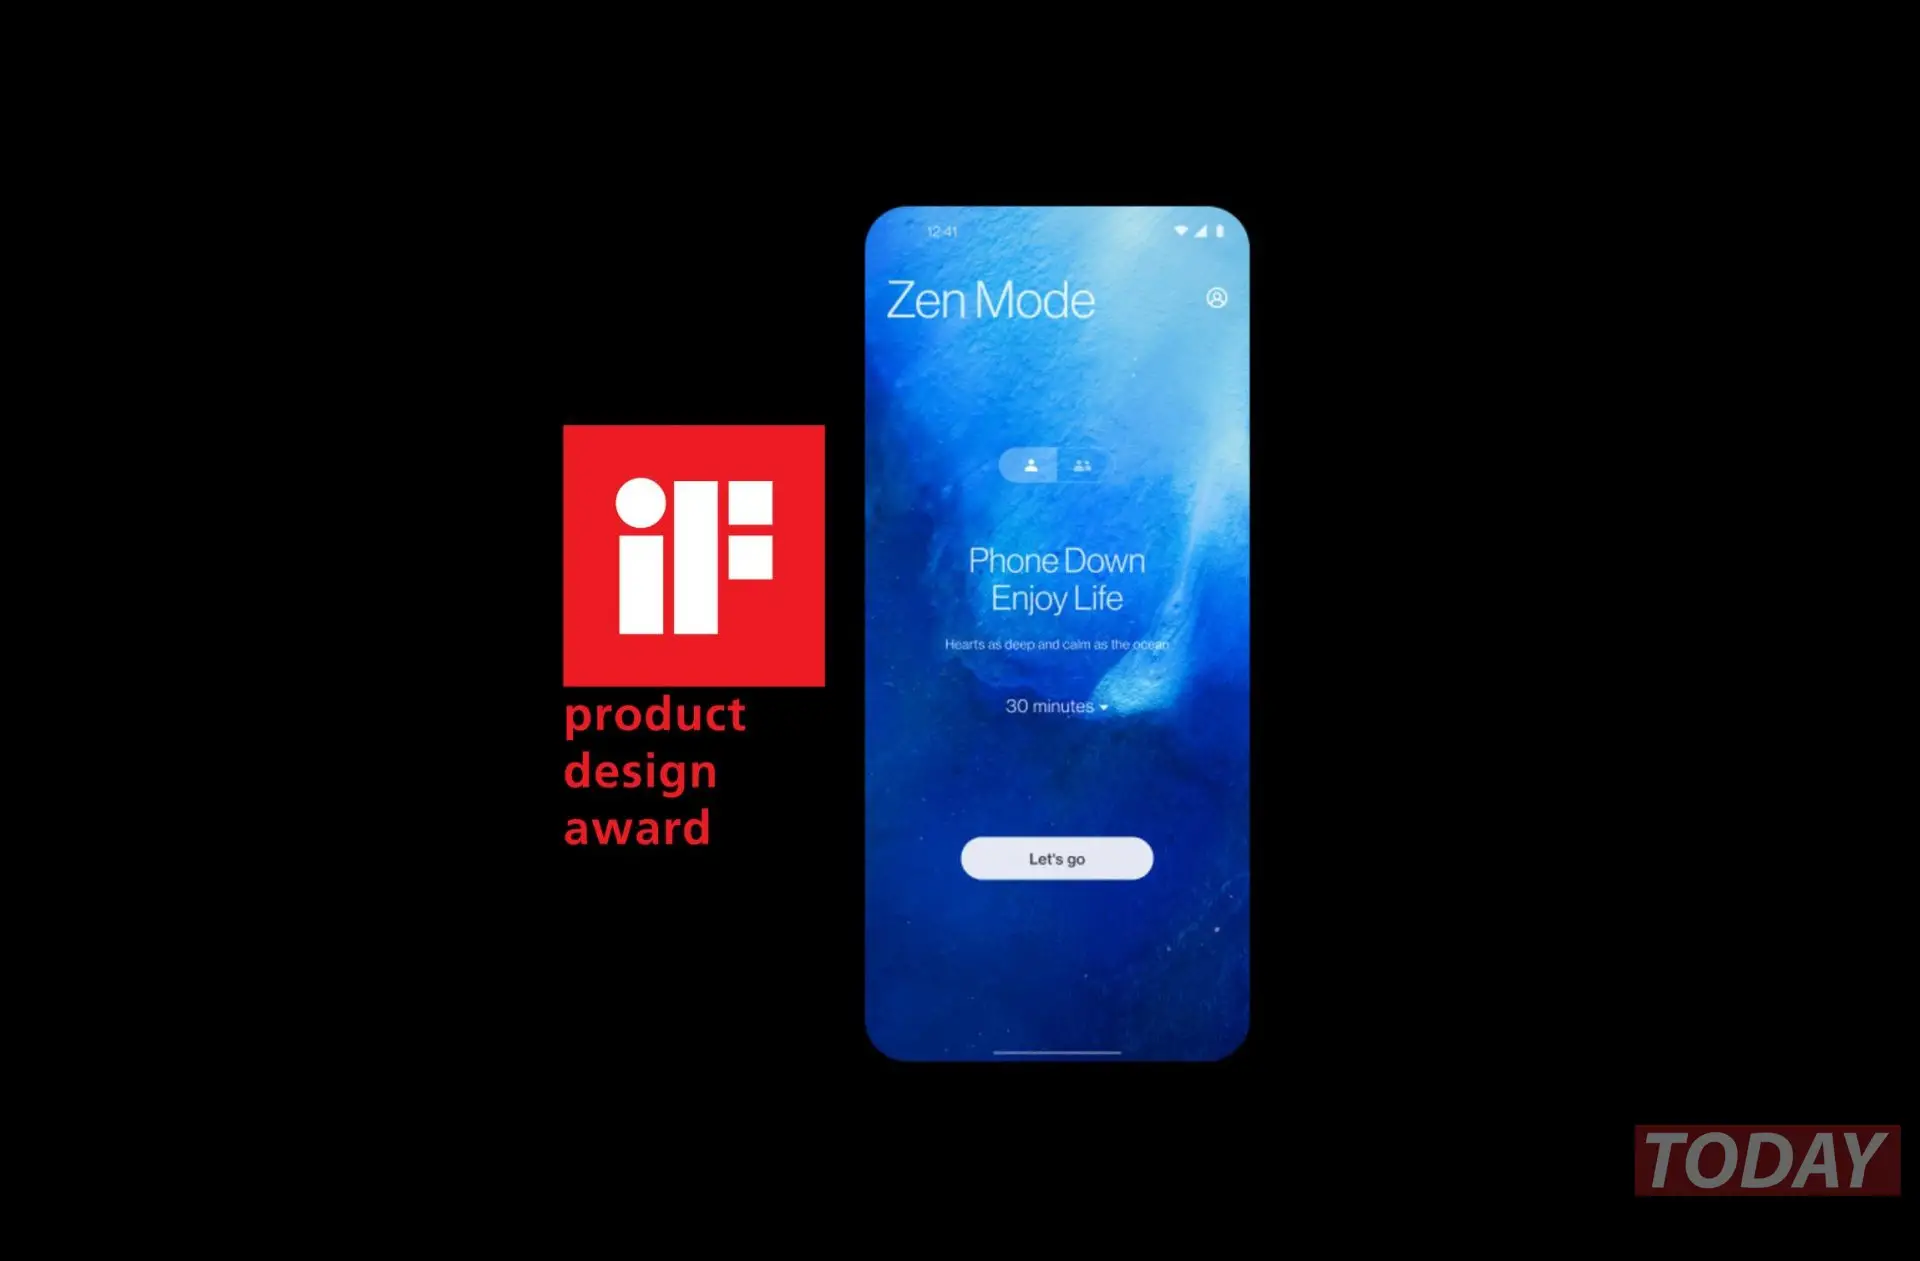 El mode zen oneplus guanya el premi de disseny